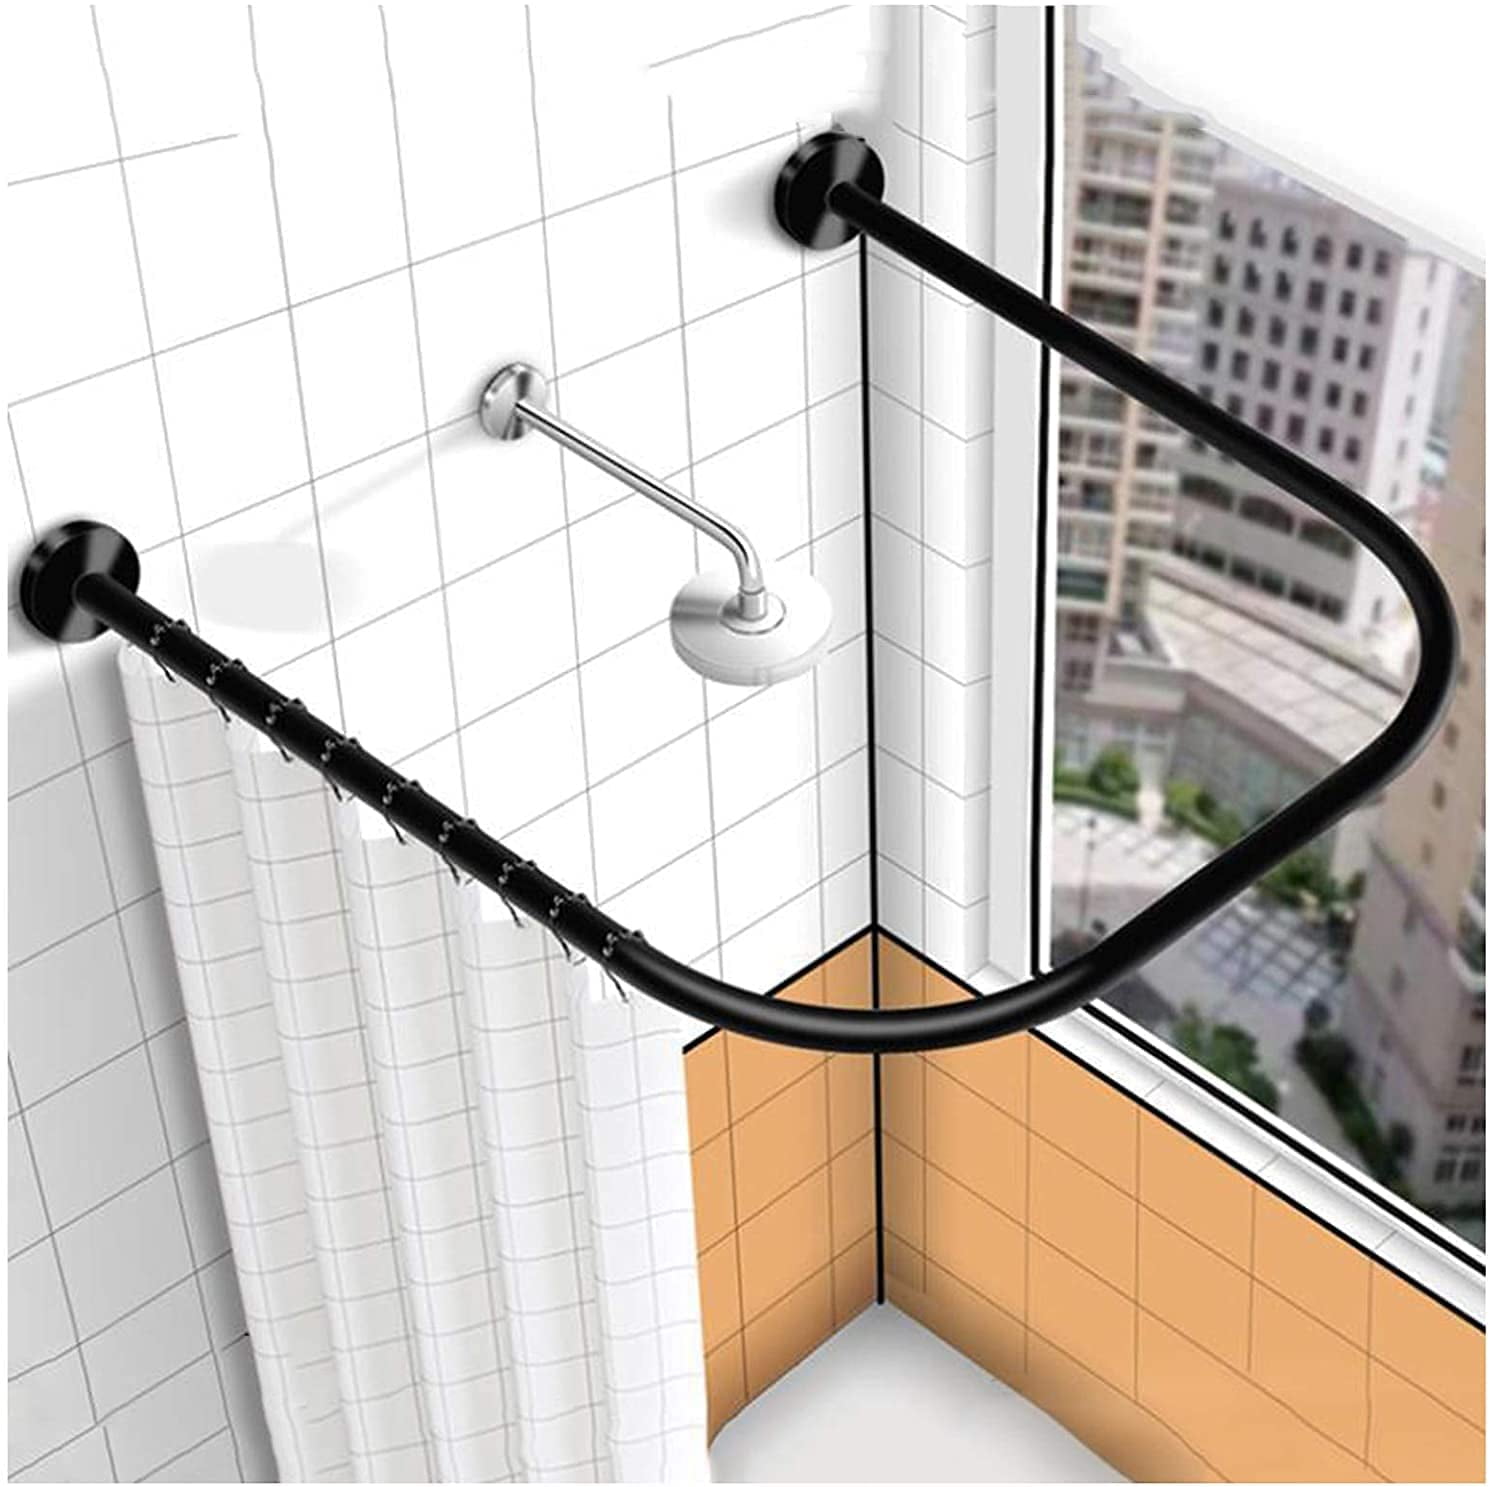 Shower Rod 90cm Adjustable Shower Rod Wall Rack with Shower Holder Chrome Plated NEW 